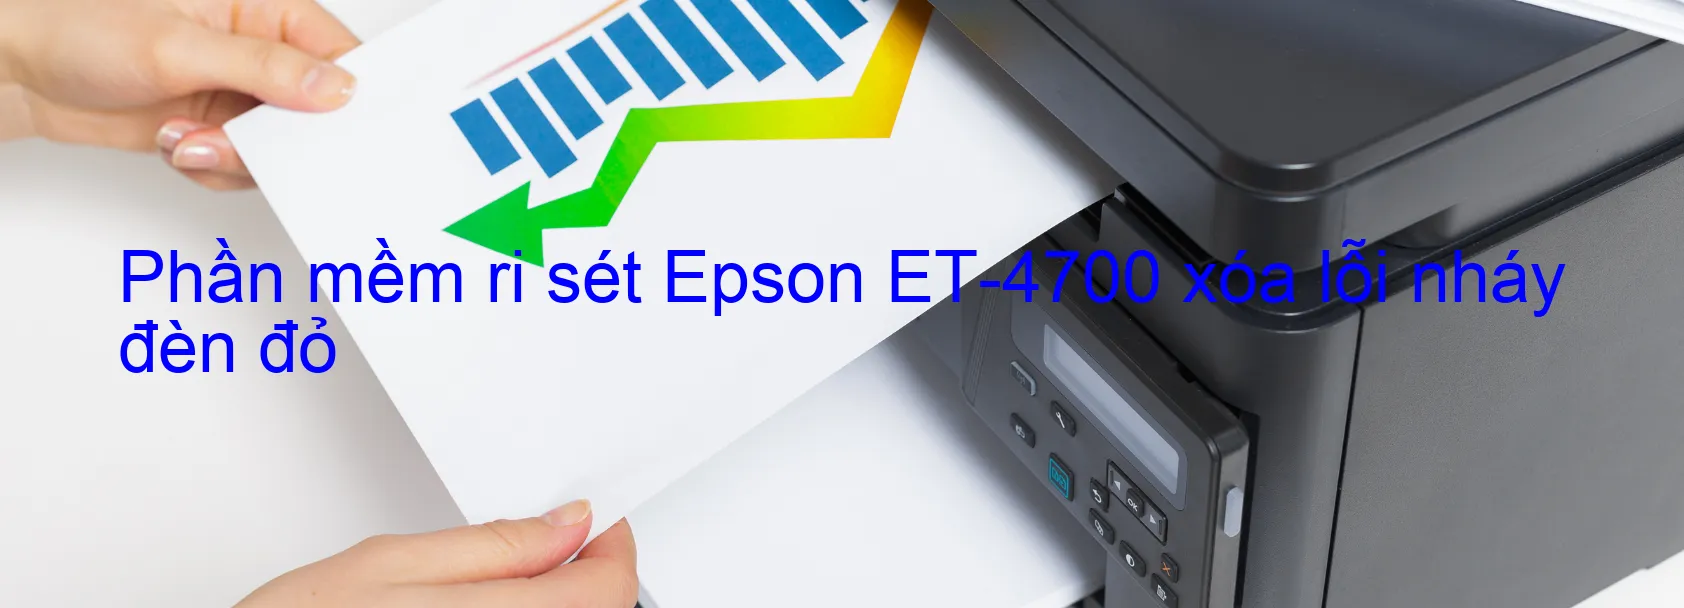 Phần mềm reset Epson ET-4700 xóa lỗi nháy đèn đỏ